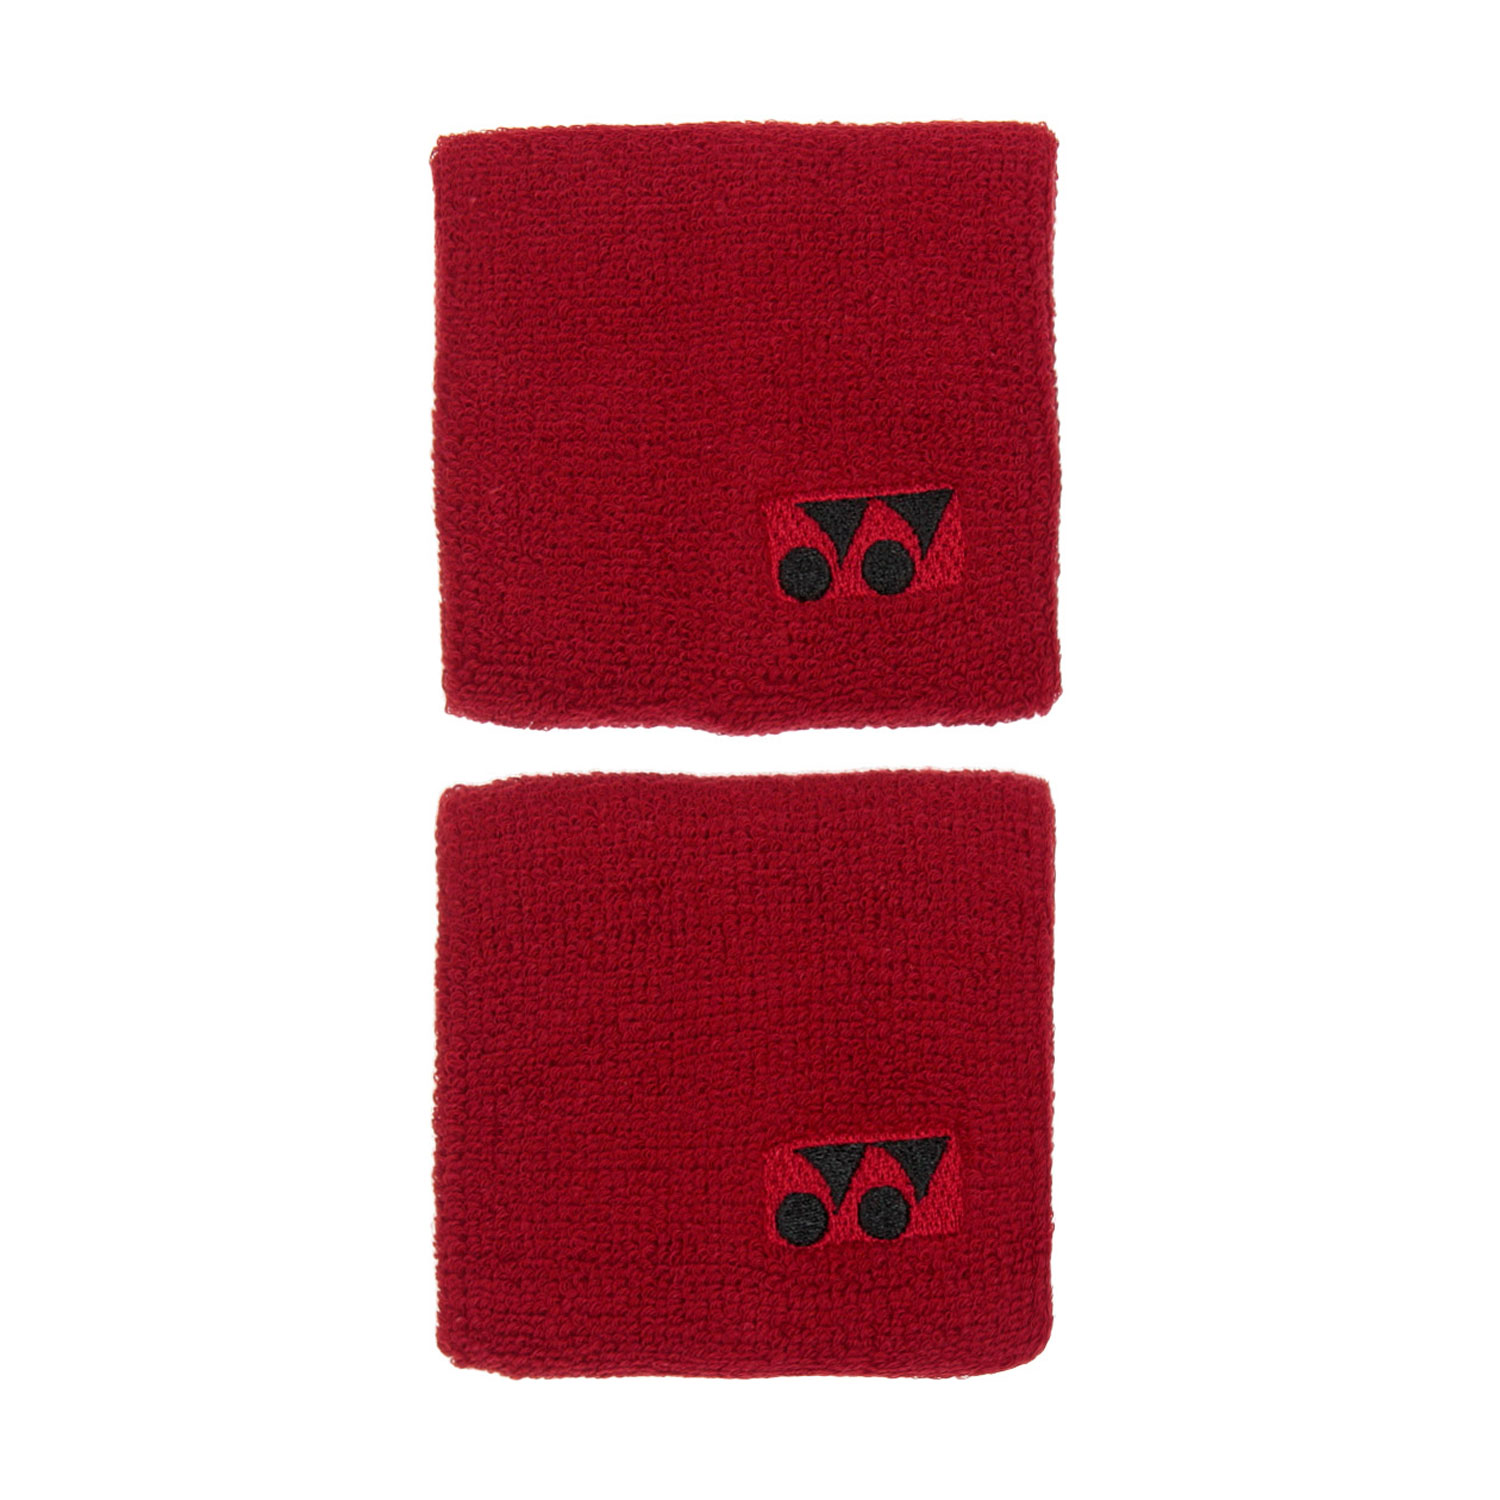 Yonex Logo Small Wristband - Red